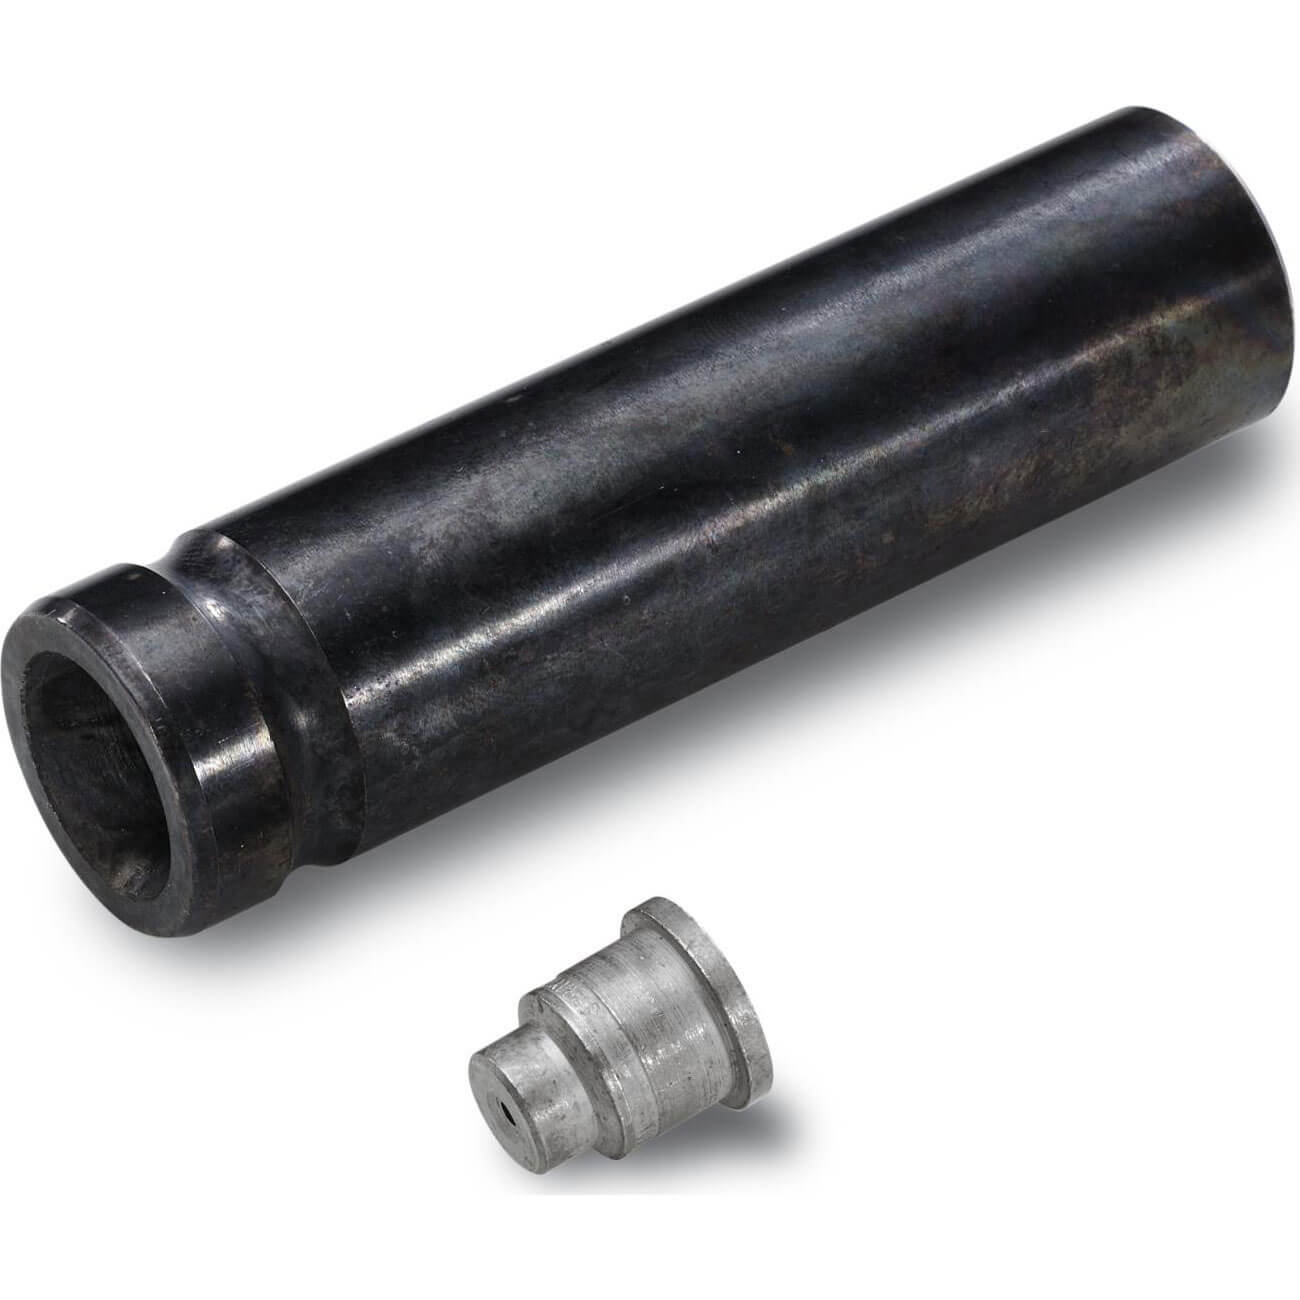 Karcher Nozzle Kit for Wet Sand Blasting Attachment fits HD & HDS 6/10, 6/12 , 6/11 & 7/ 11 Models